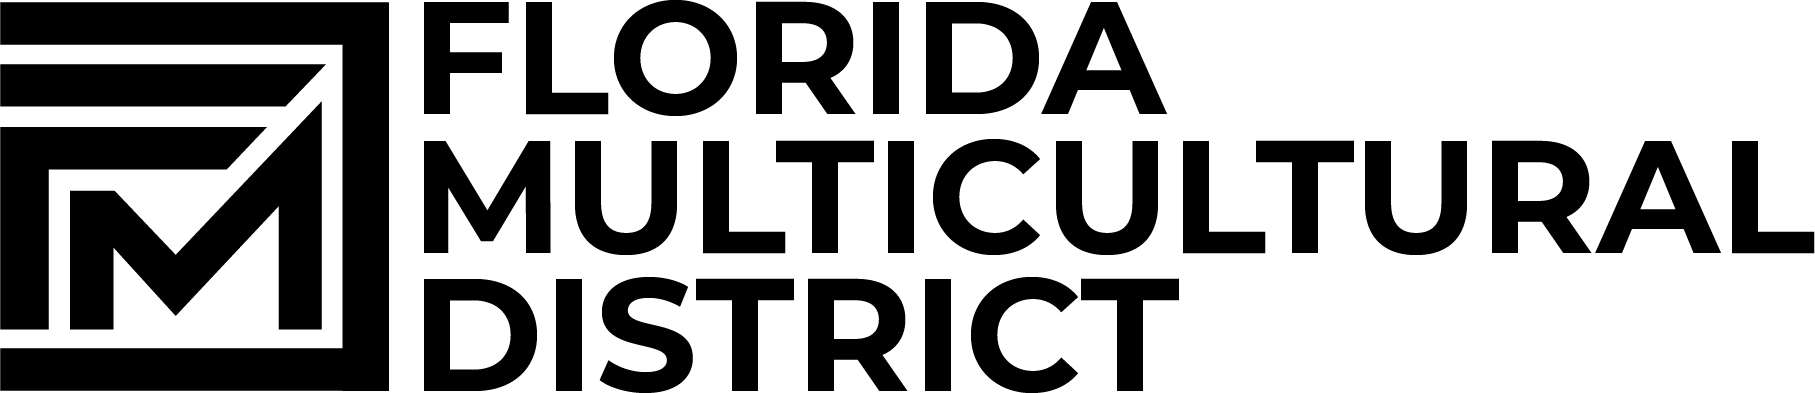 Florida Multicultural District